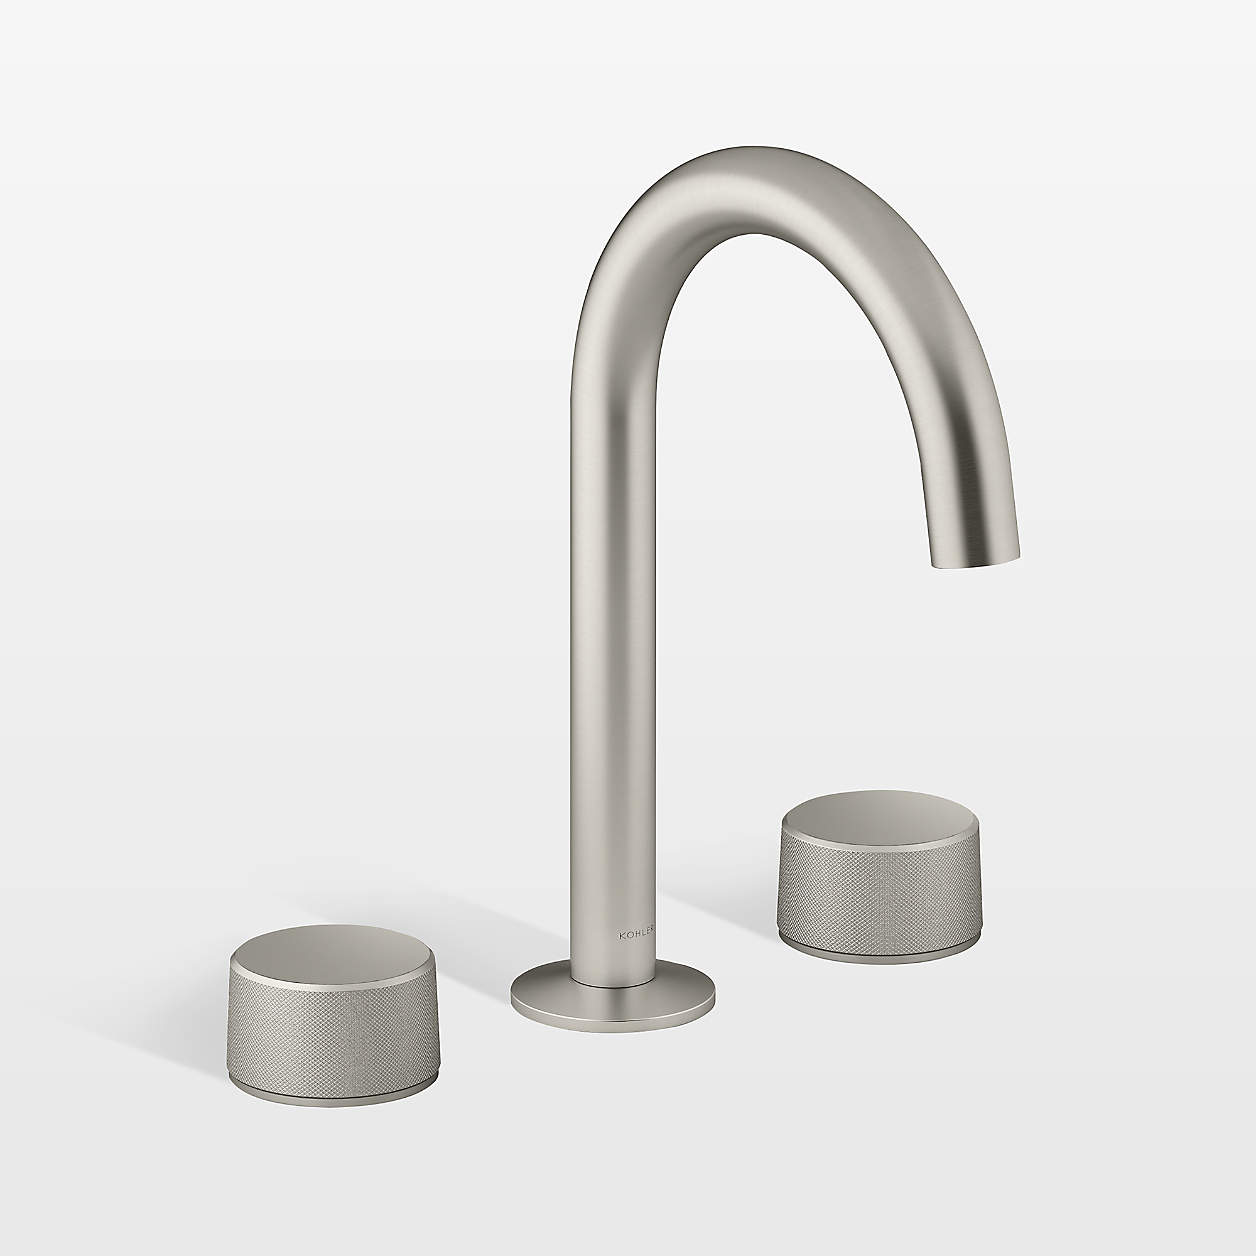 Kohler Components Nickel Widespread Bathroom Sink Faucet And Handles 